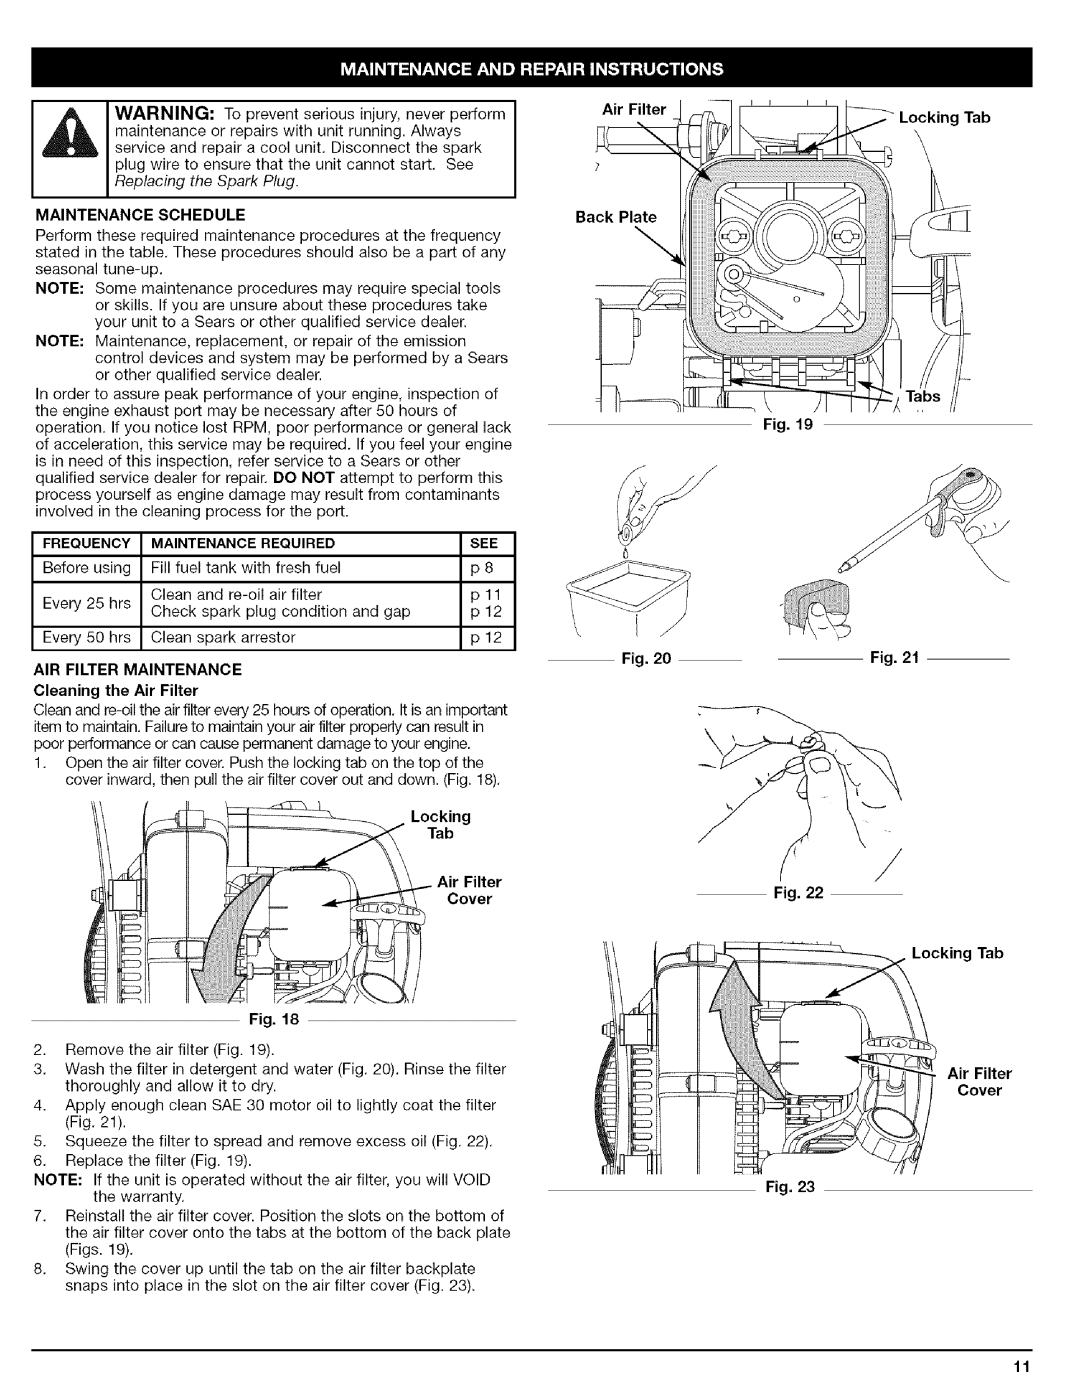 Craftsman 316.79479 manual Replacing the Spark Plug, Maintenance Schedule 